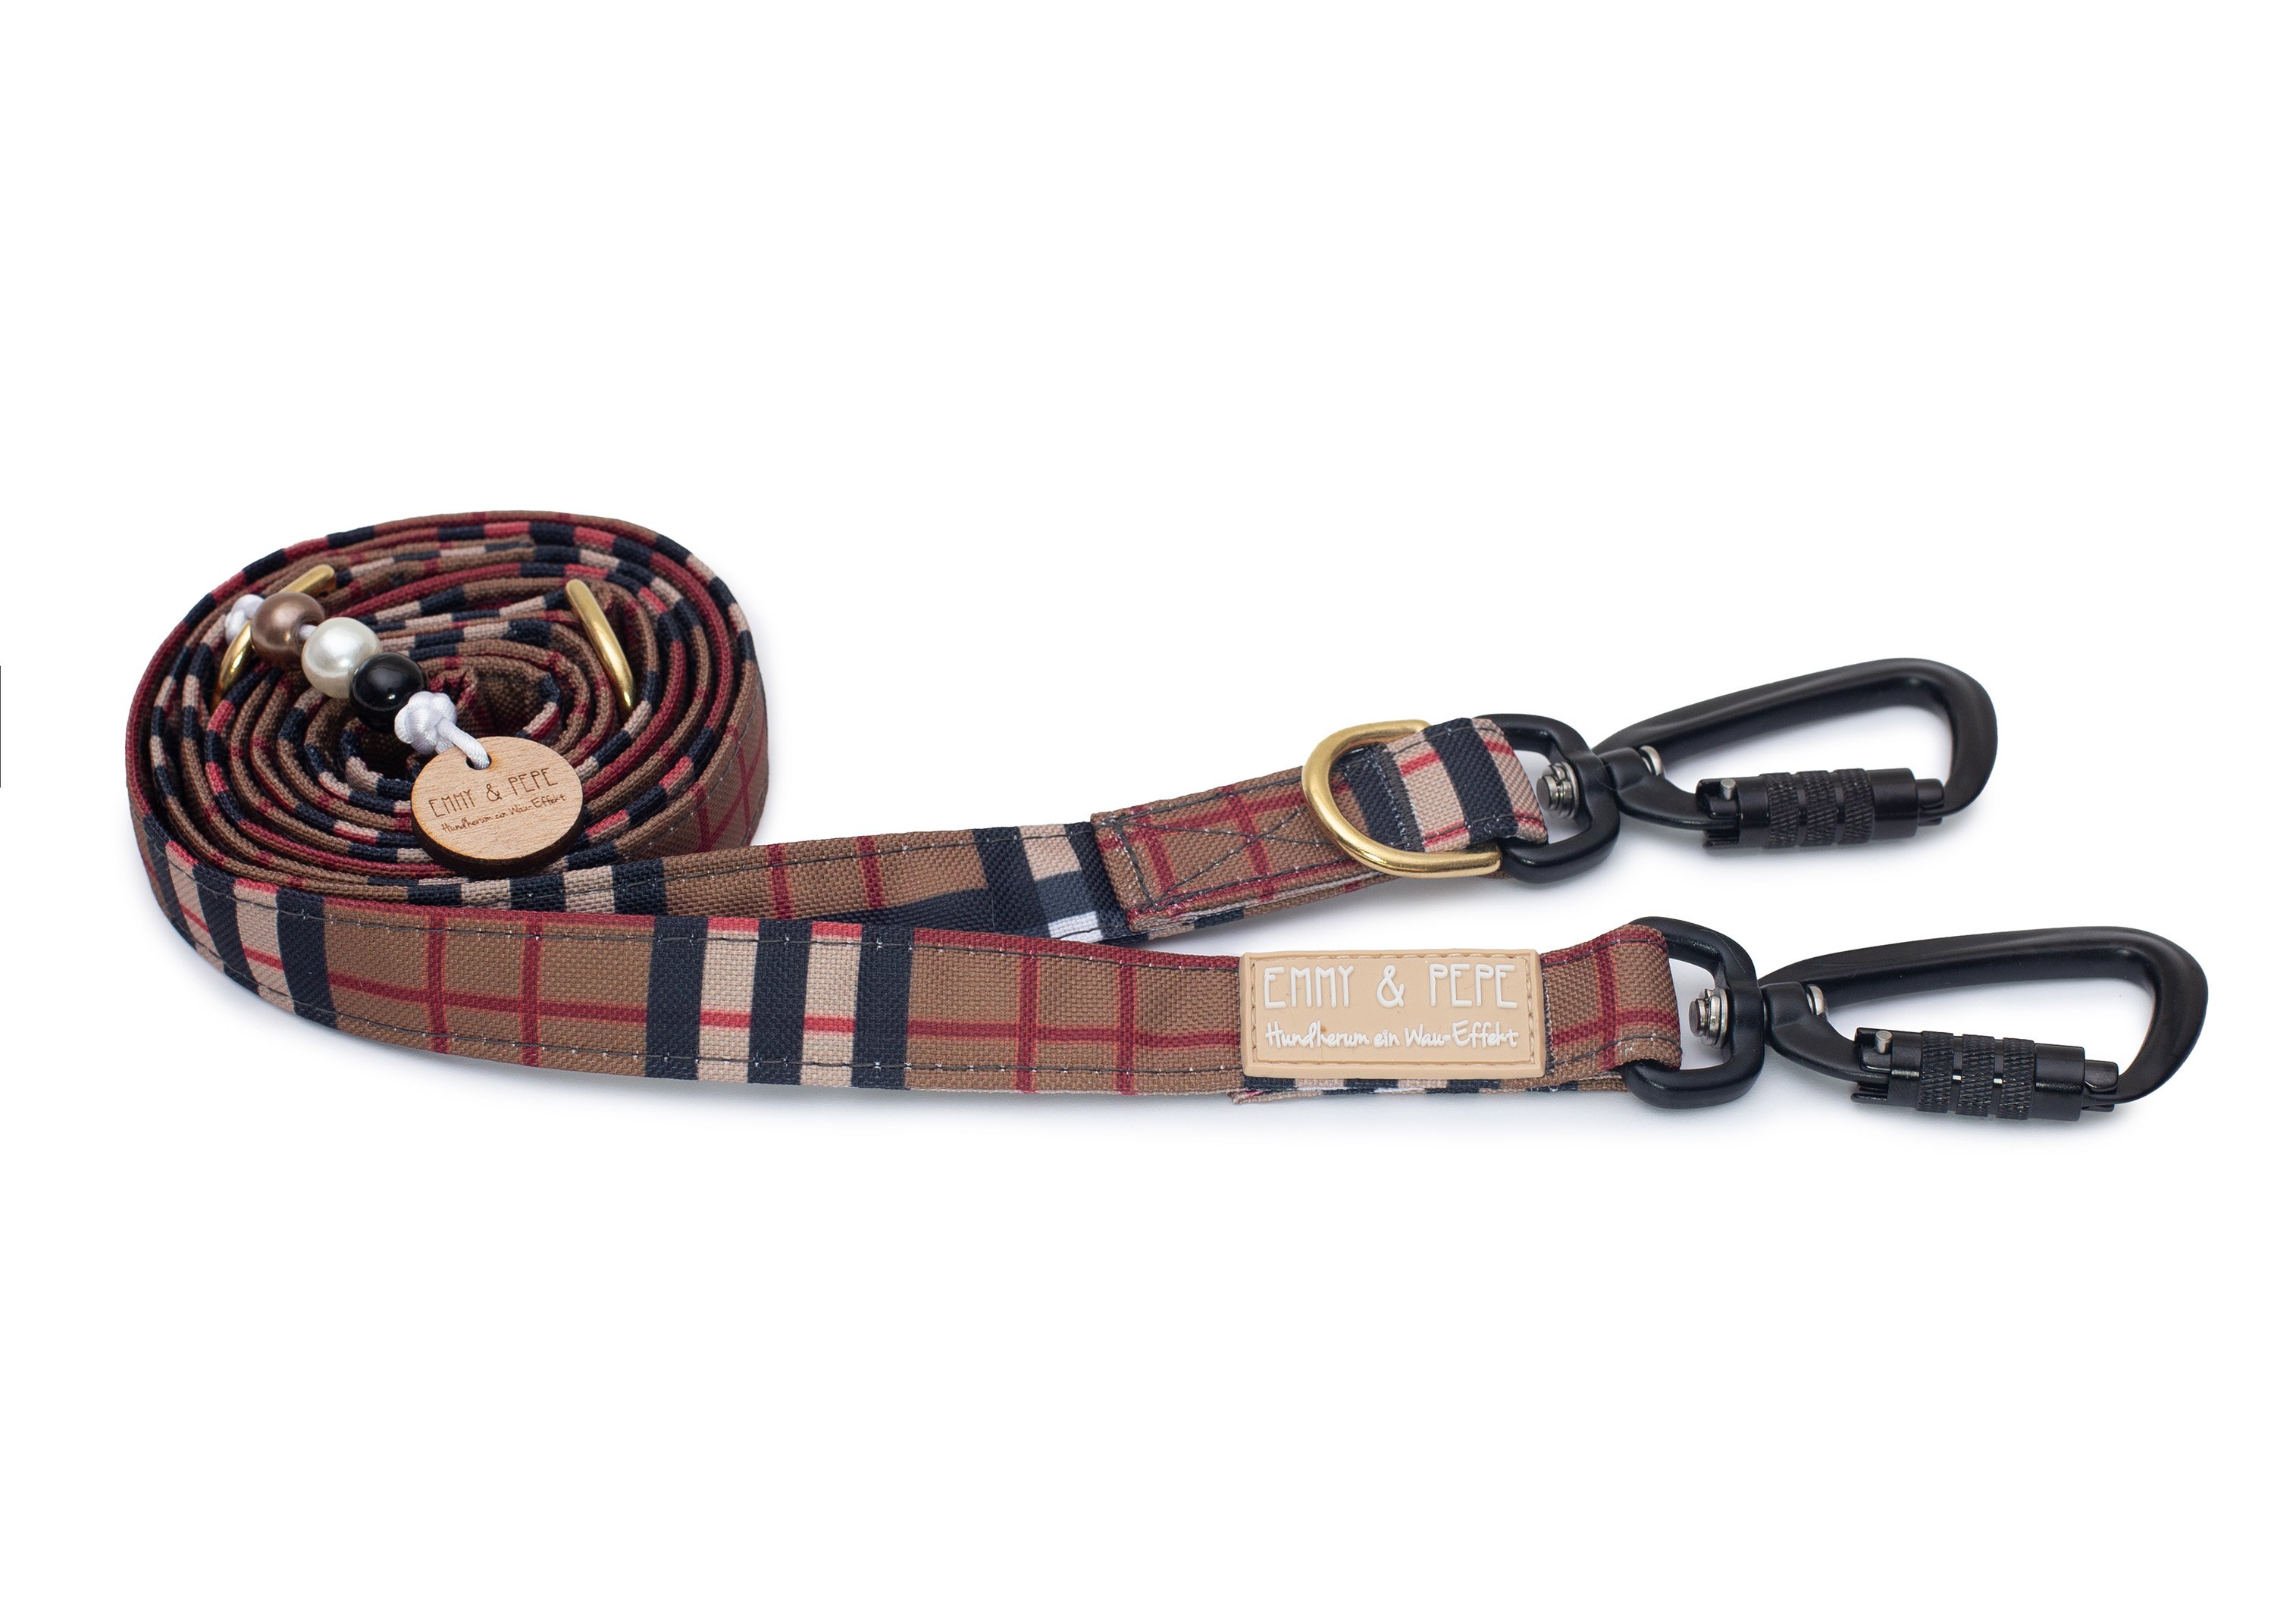 Sherlock dog leash with safety carabiner